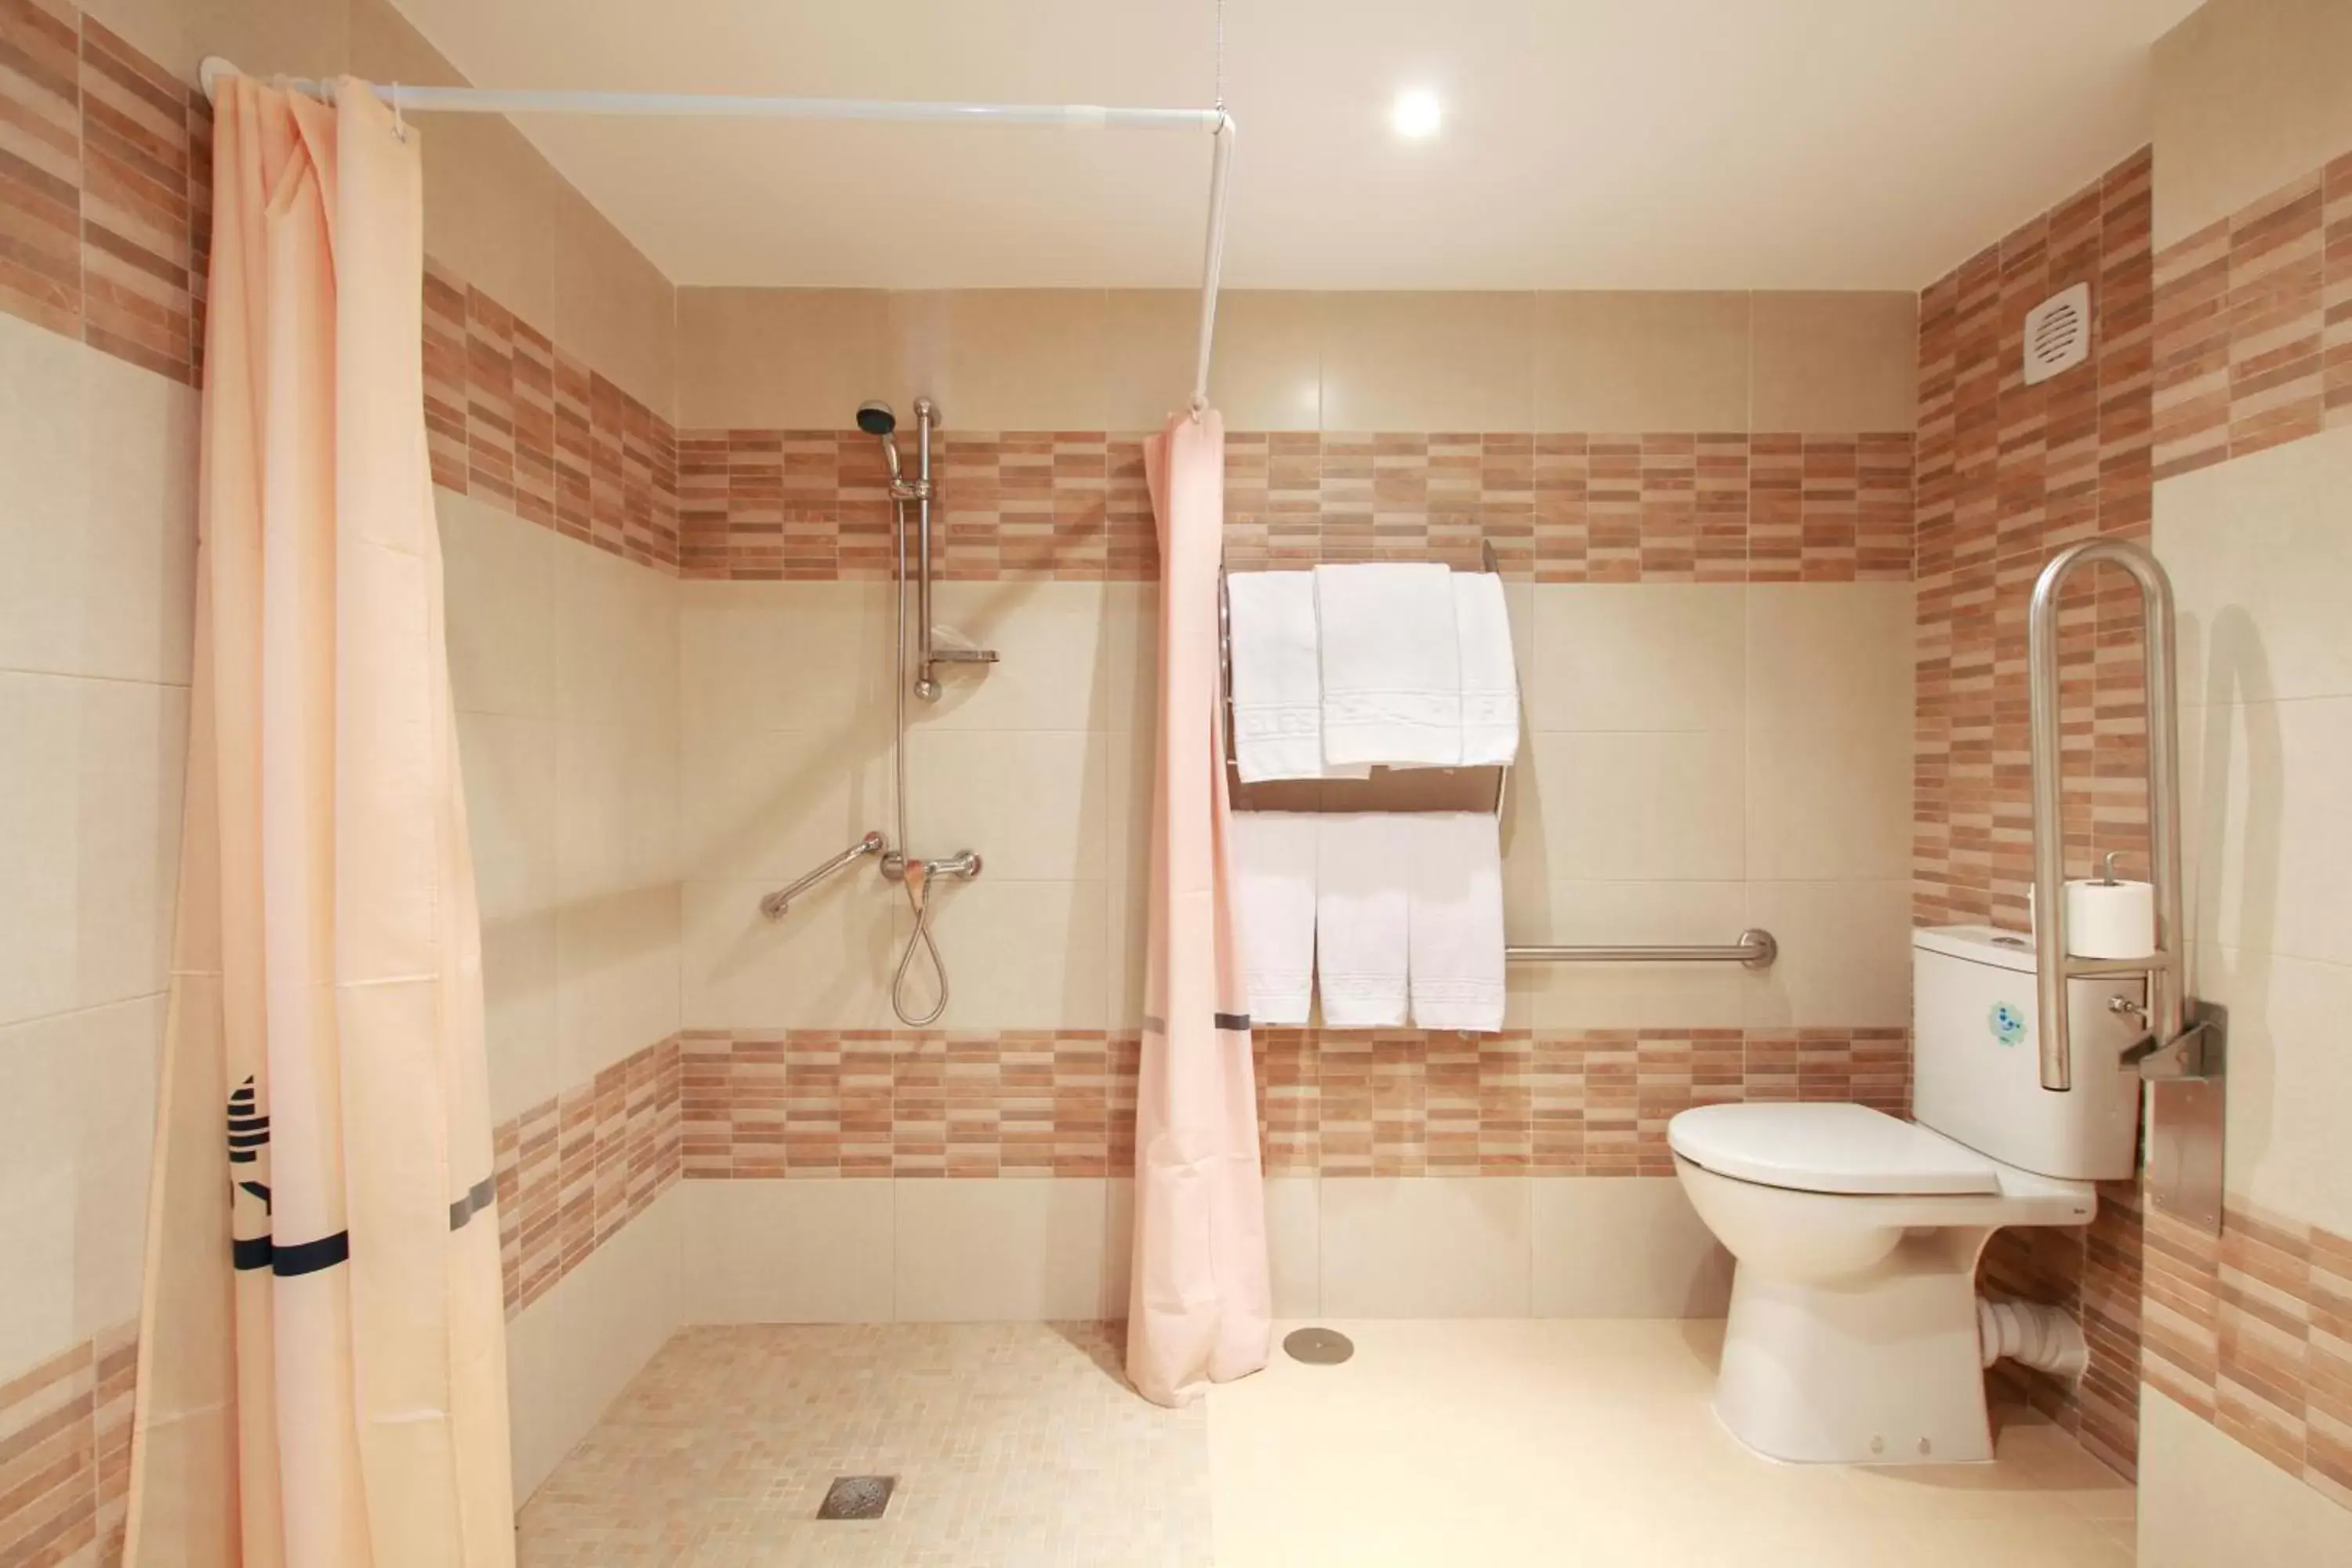 Shower, Bathroom in Hotel Apartamentos Pyr Fuengirola